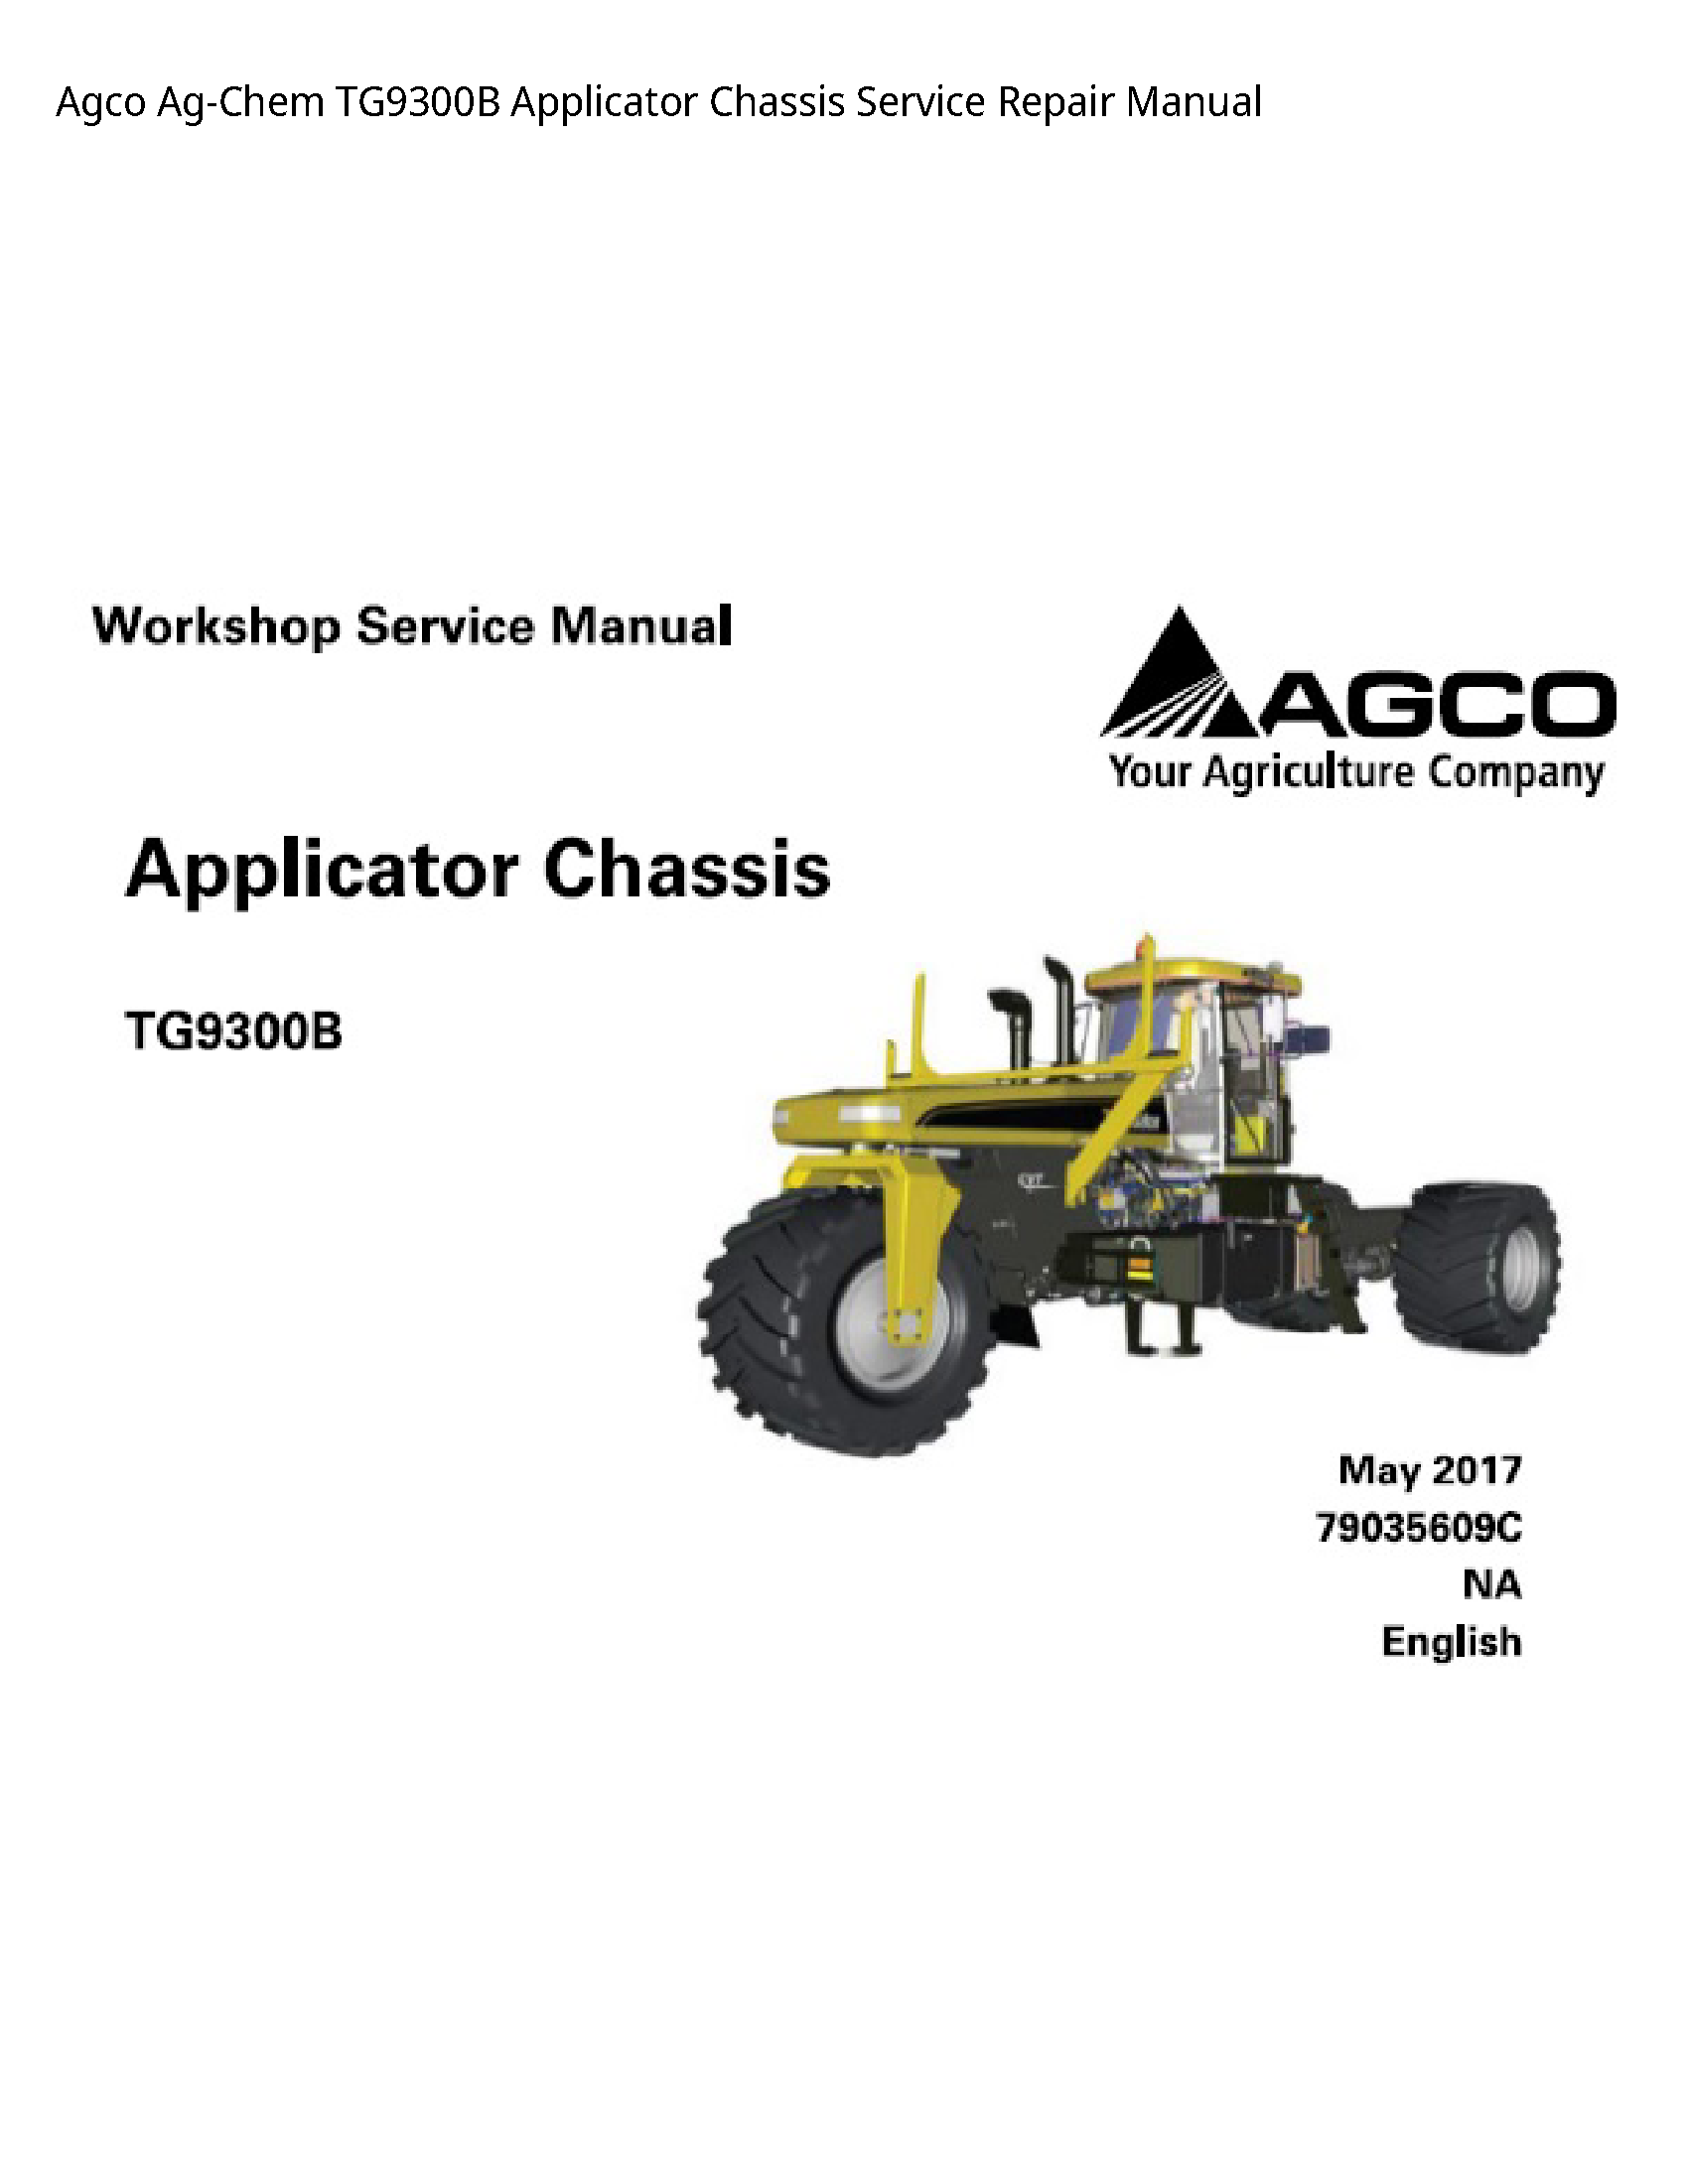 AGCO TG9300B Ag-Chem Applicator Chassis manual